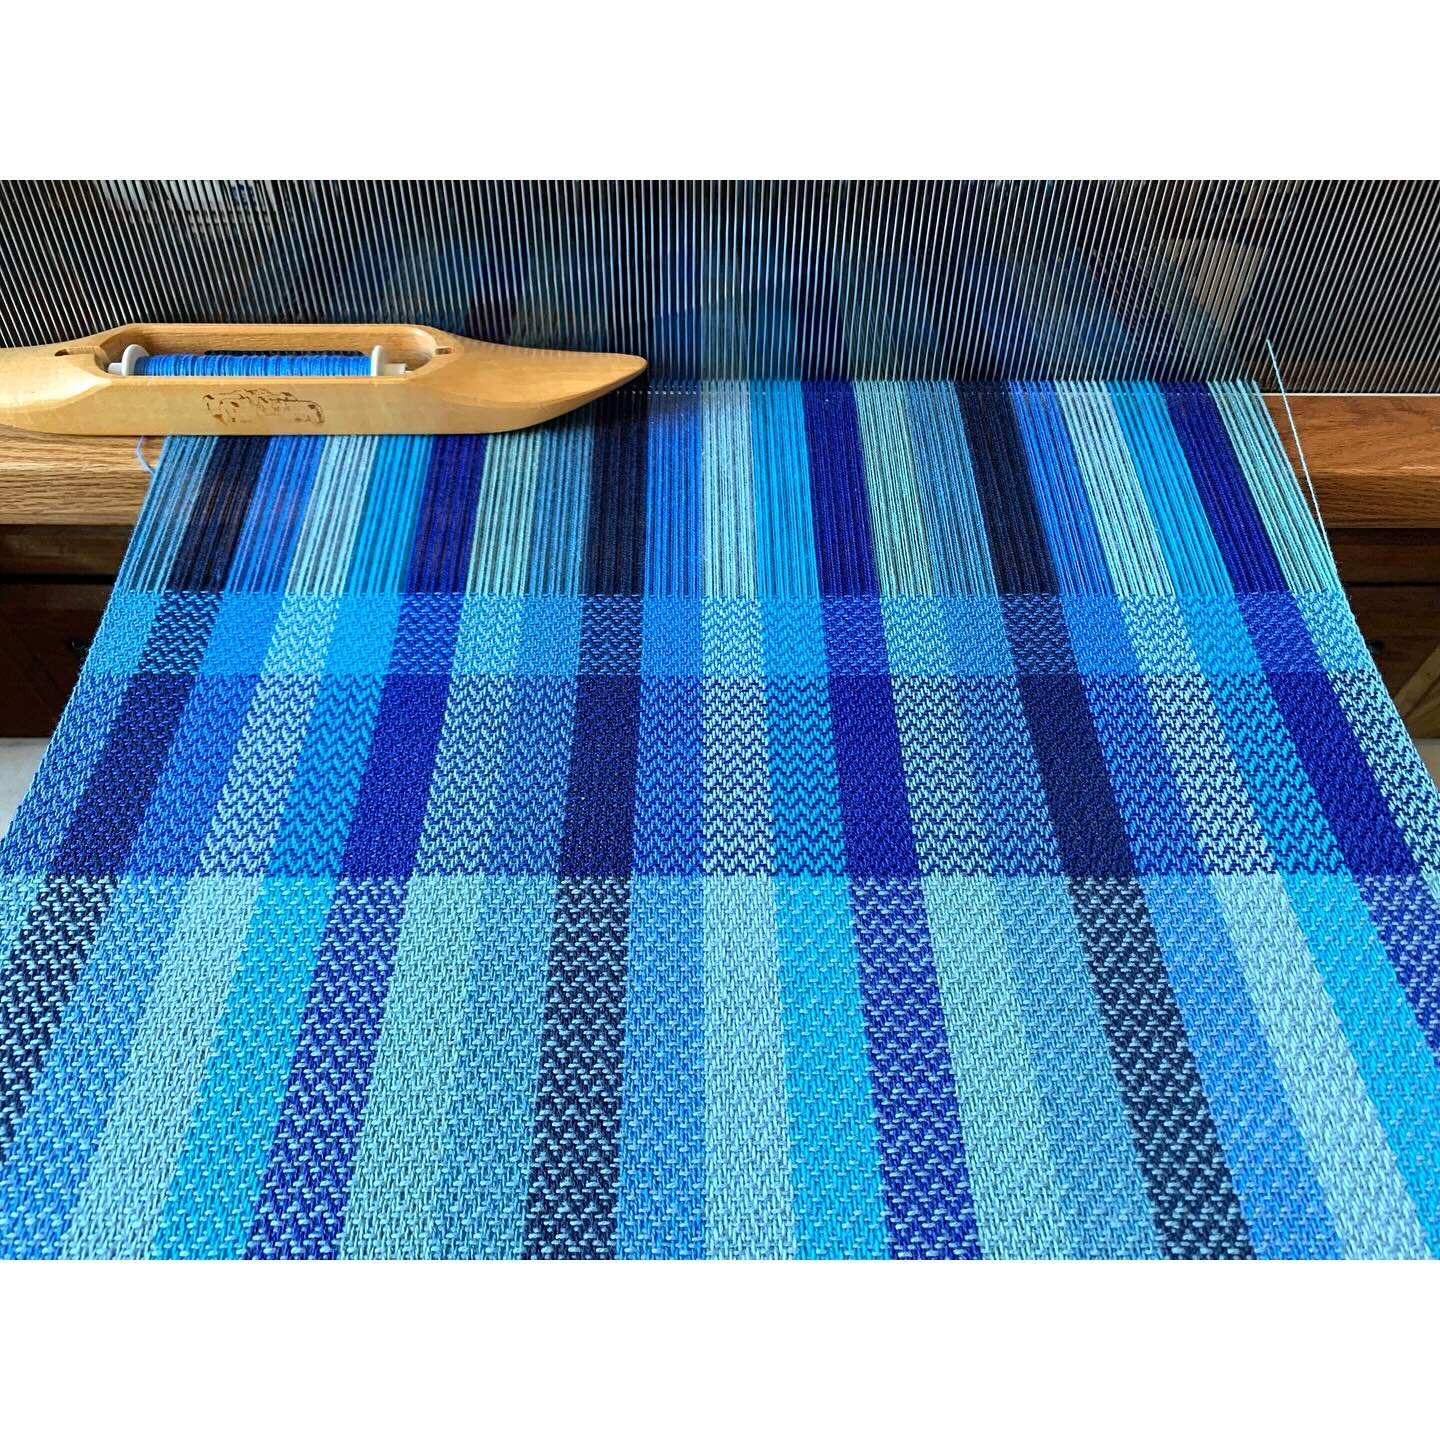 💙🩵💙🩵
.
.
.
.
#weaving #weaversofinstagram  #handwoven #woven #handweaving #loom #loomtime #loomweaving #stripes #ontheloom #woventextiles #textiles #slowcloth #fiberart #chicagocrafter #chicagoartist